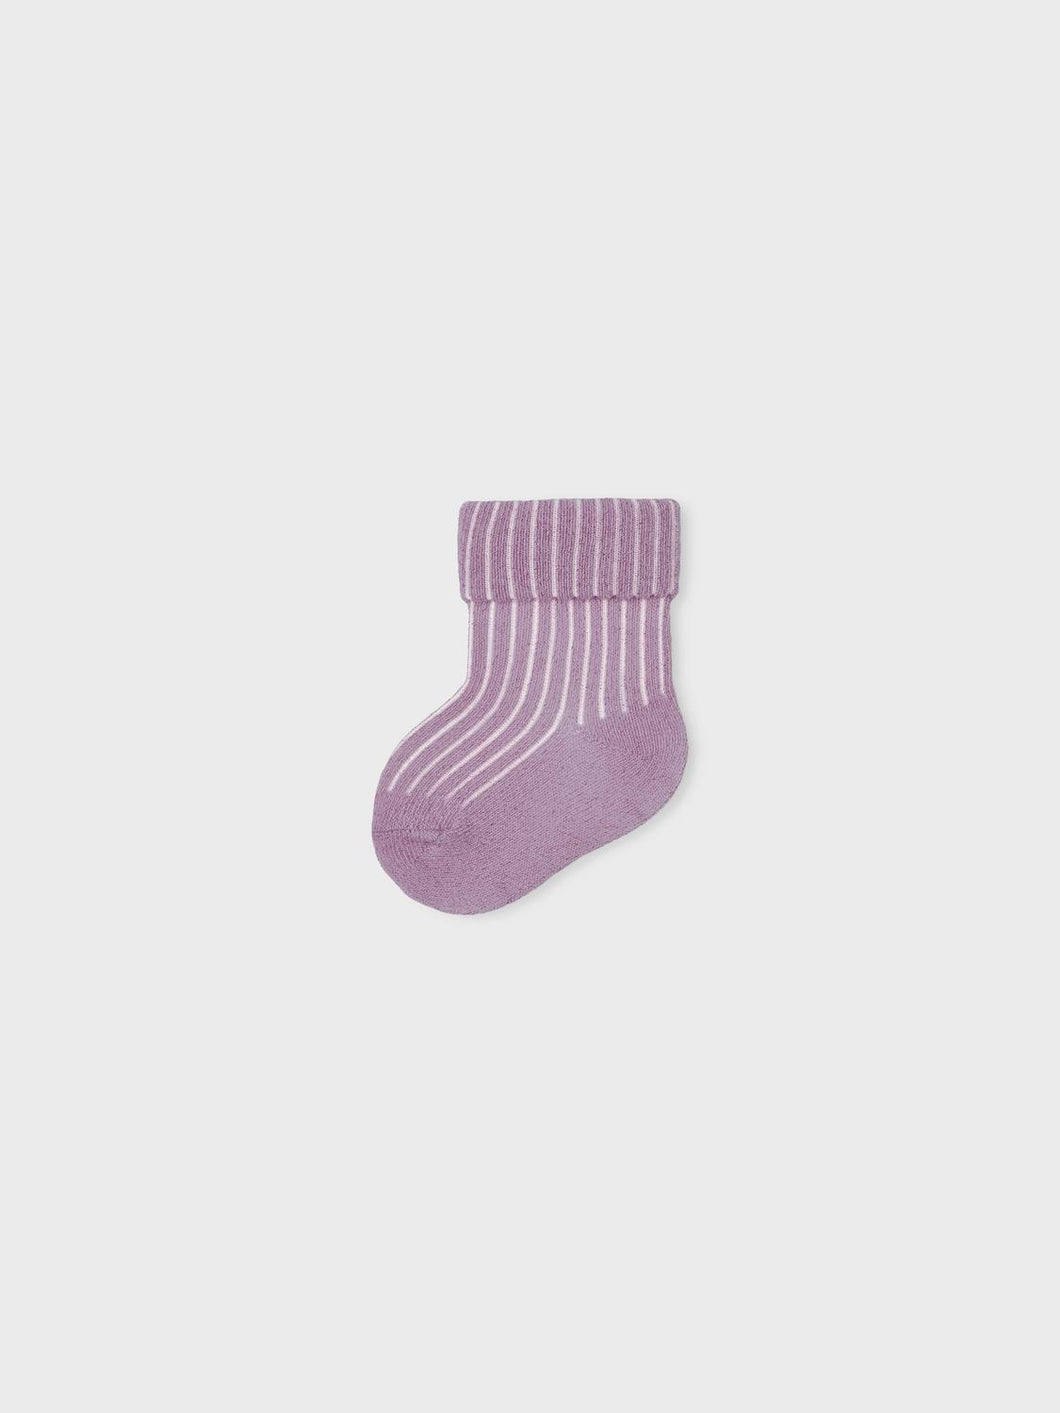 NBFNOBBA Socks - Lavender Mist